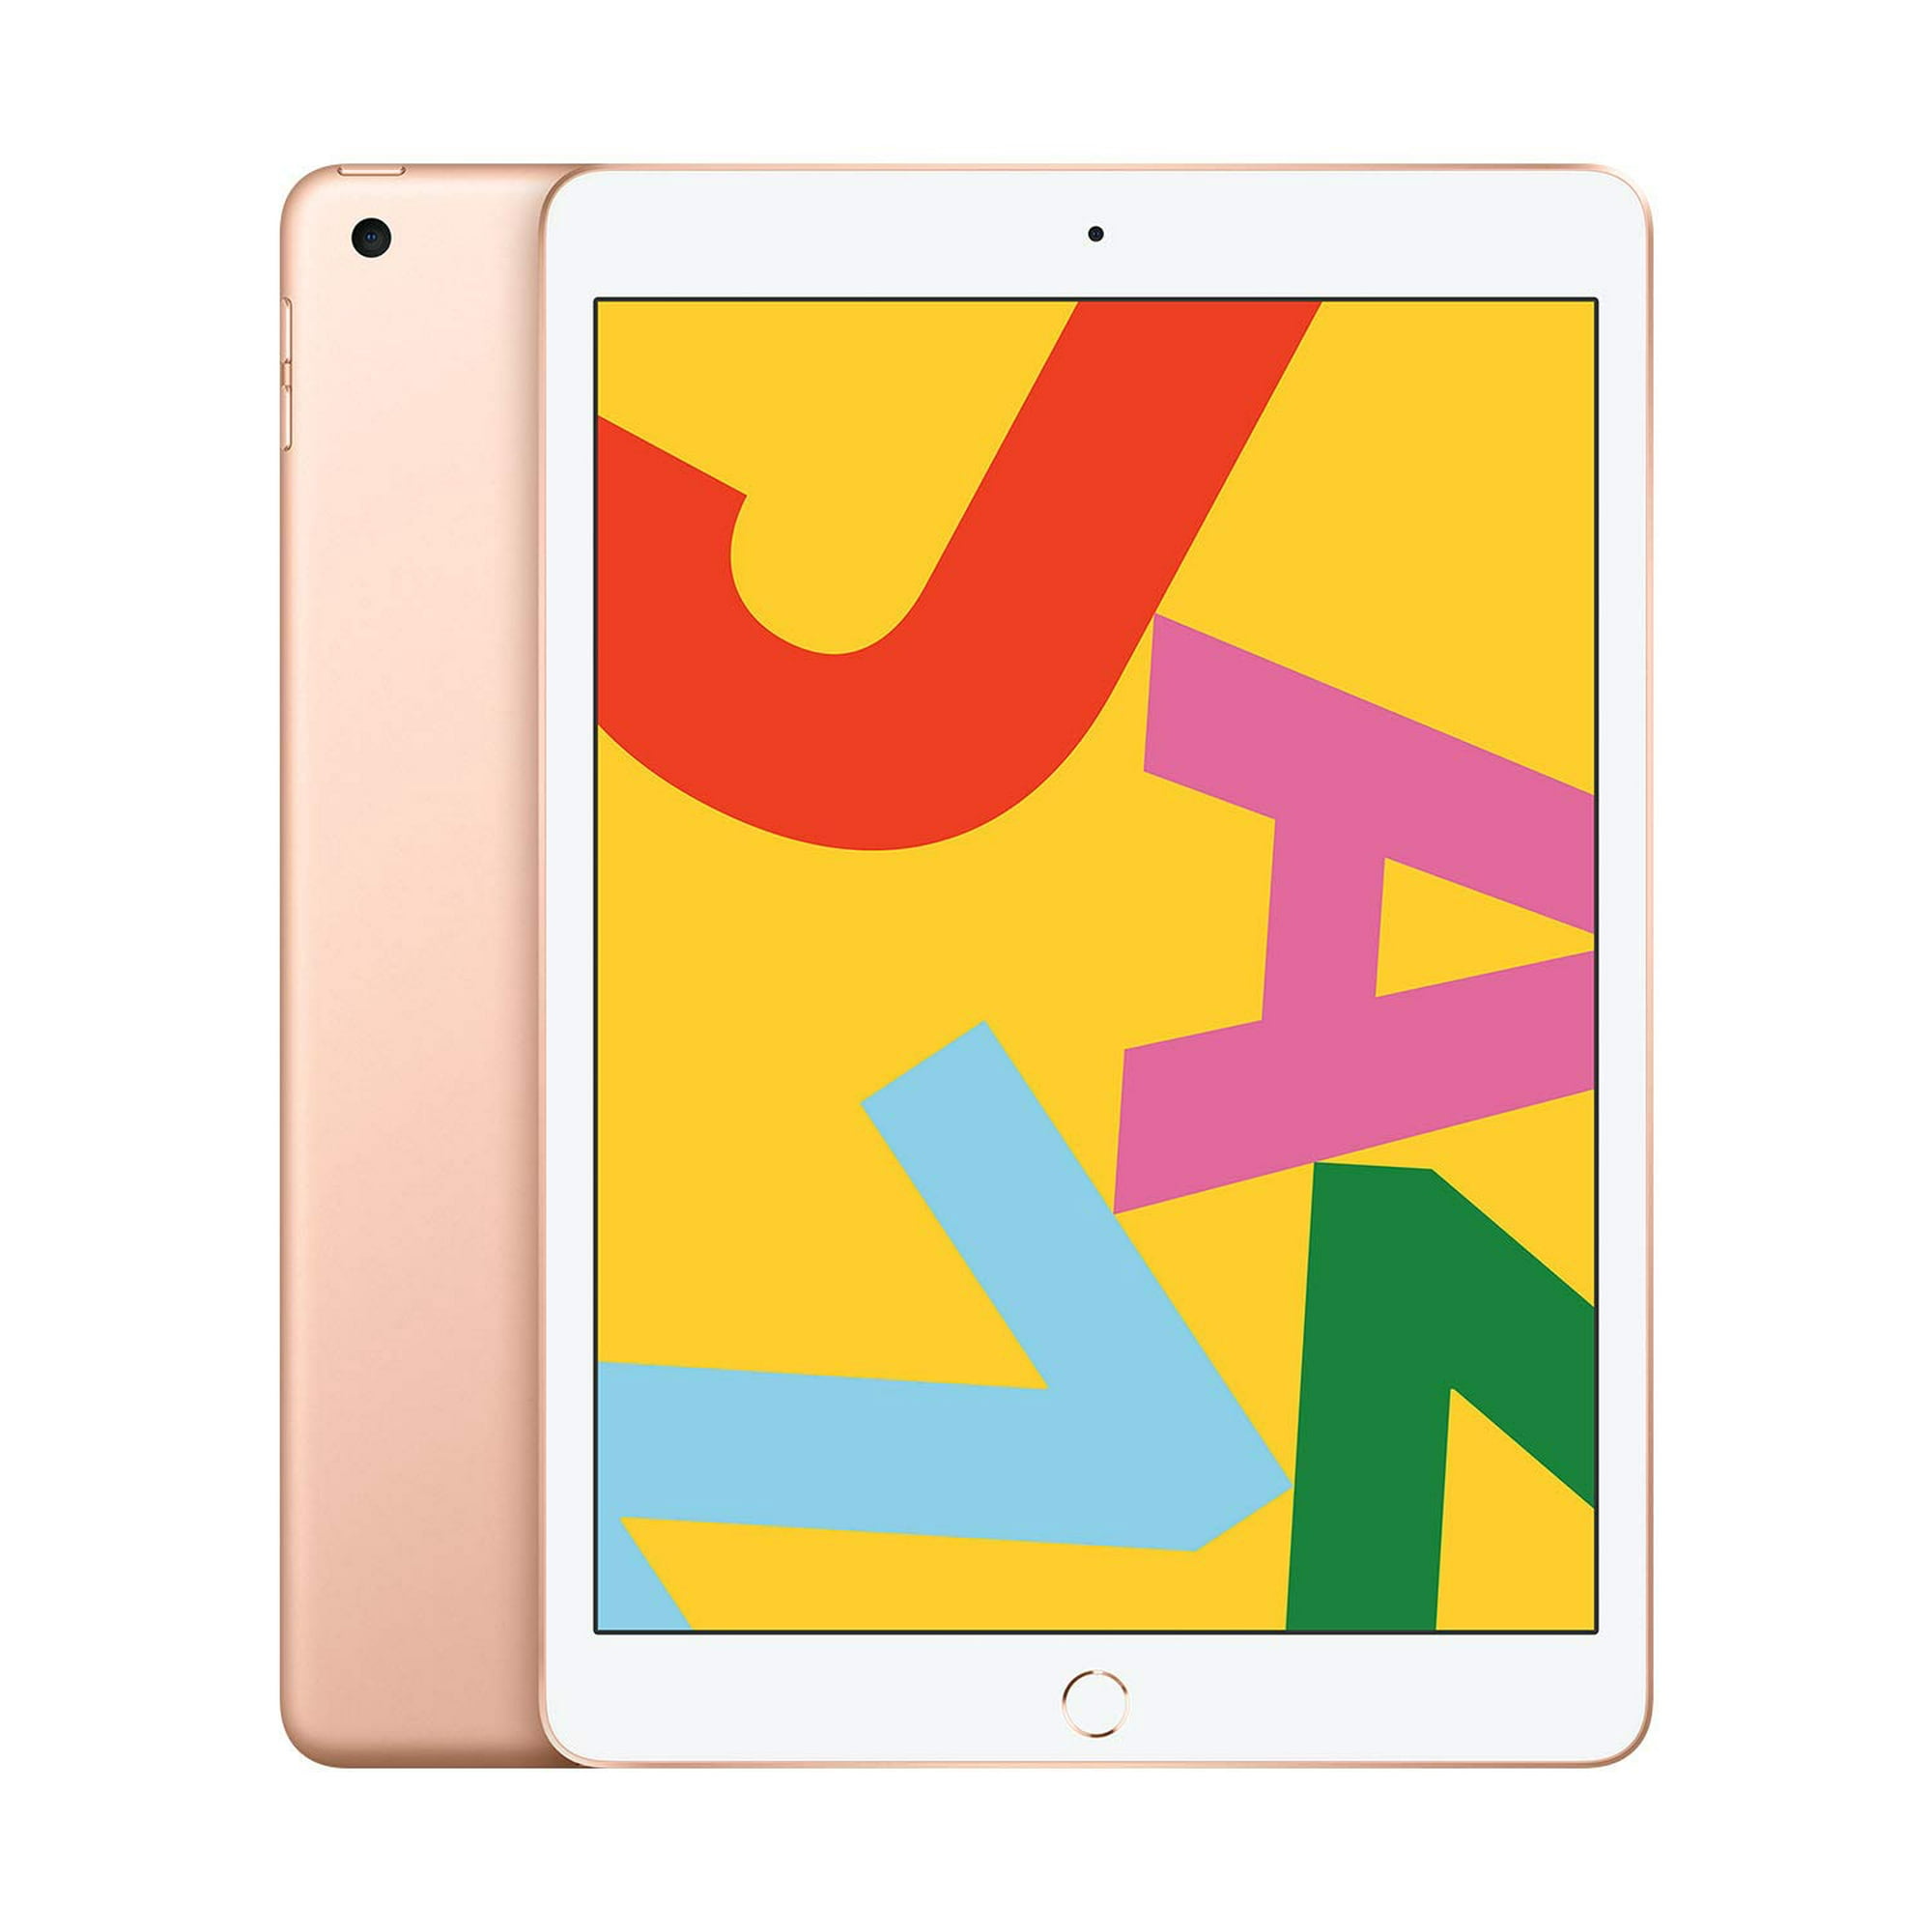 Apple iPad 7th Gen 32GB Gold Wi-Fi MW762VC/A | Walmart Canada